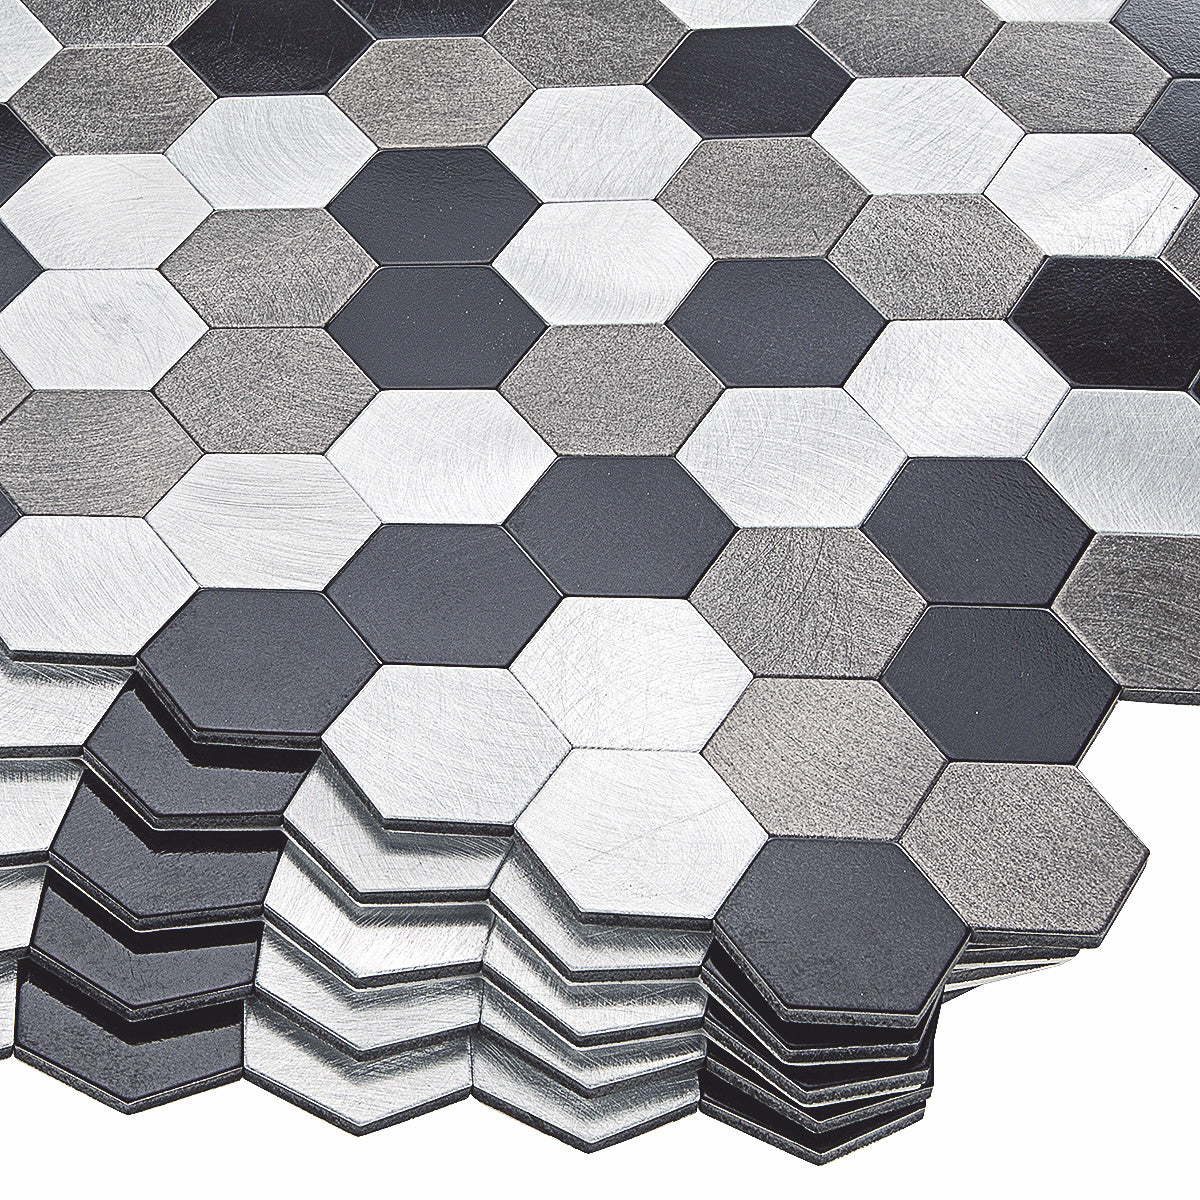 Decopus Metal Tile Backsplash Peel and Stick (Hexagon Black Silver Grey Matte 12 x12'', 1.6'')